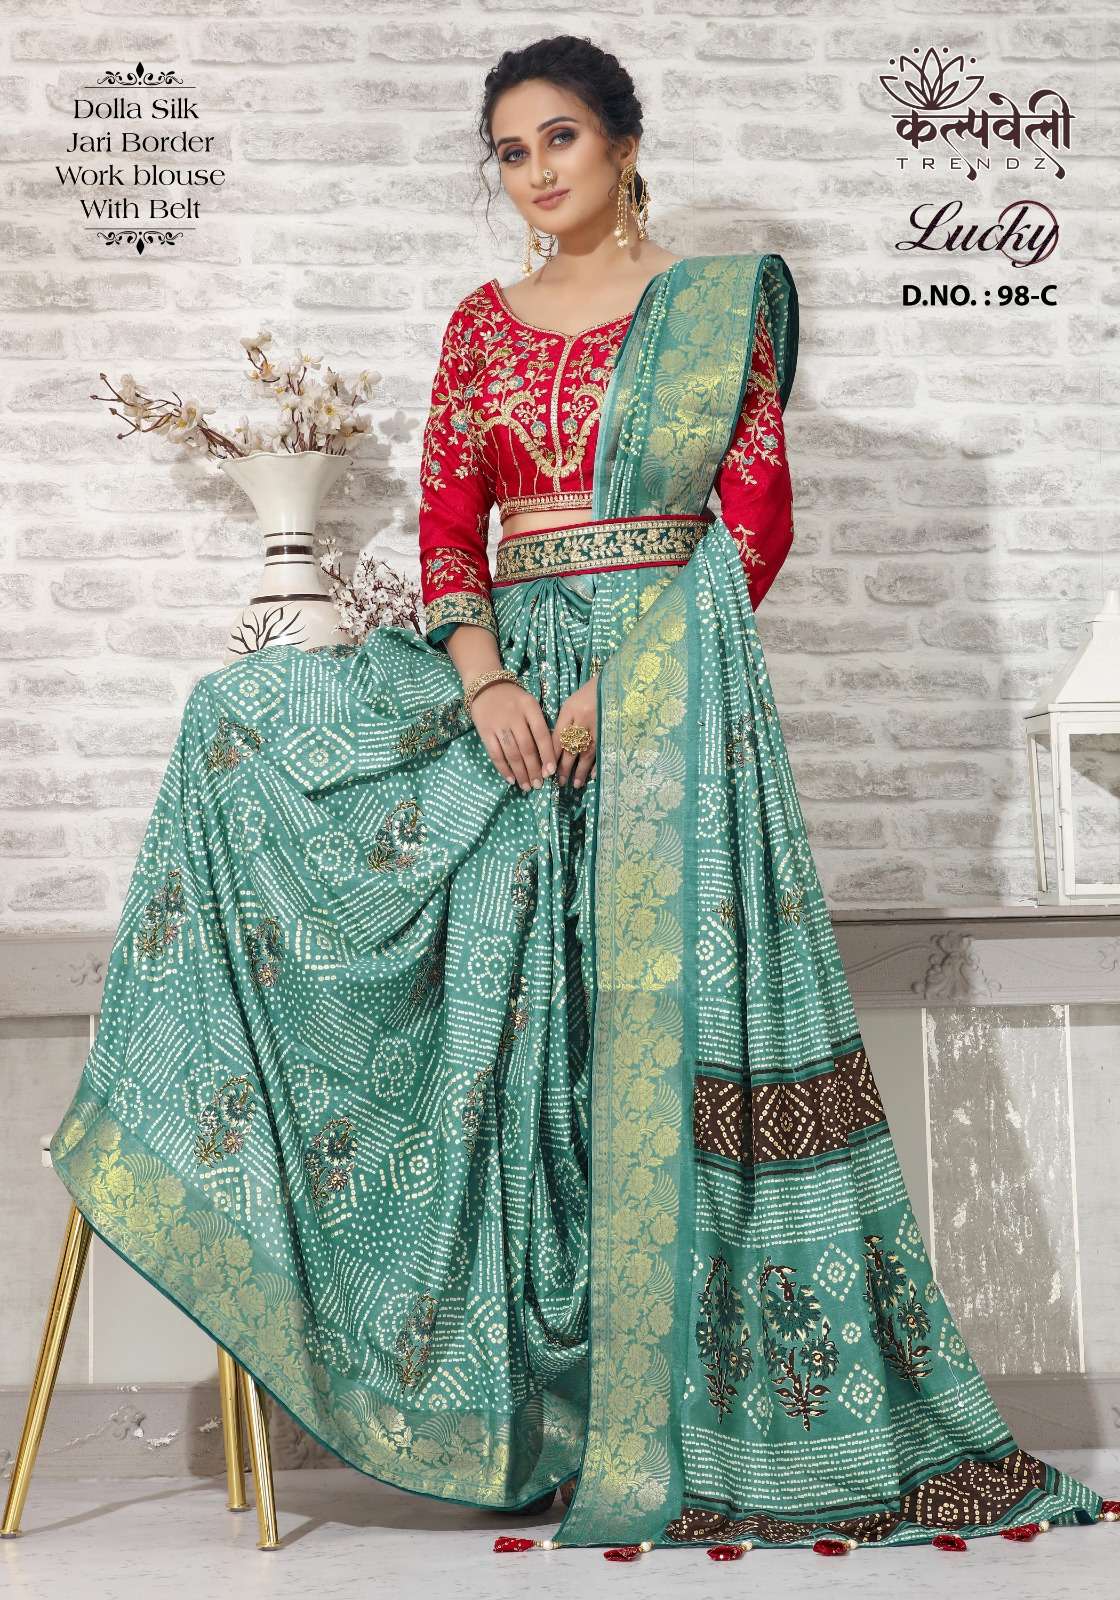 kalpavelly trendz lucky 98 fancy zari border design sarees with blouse peice and work belt